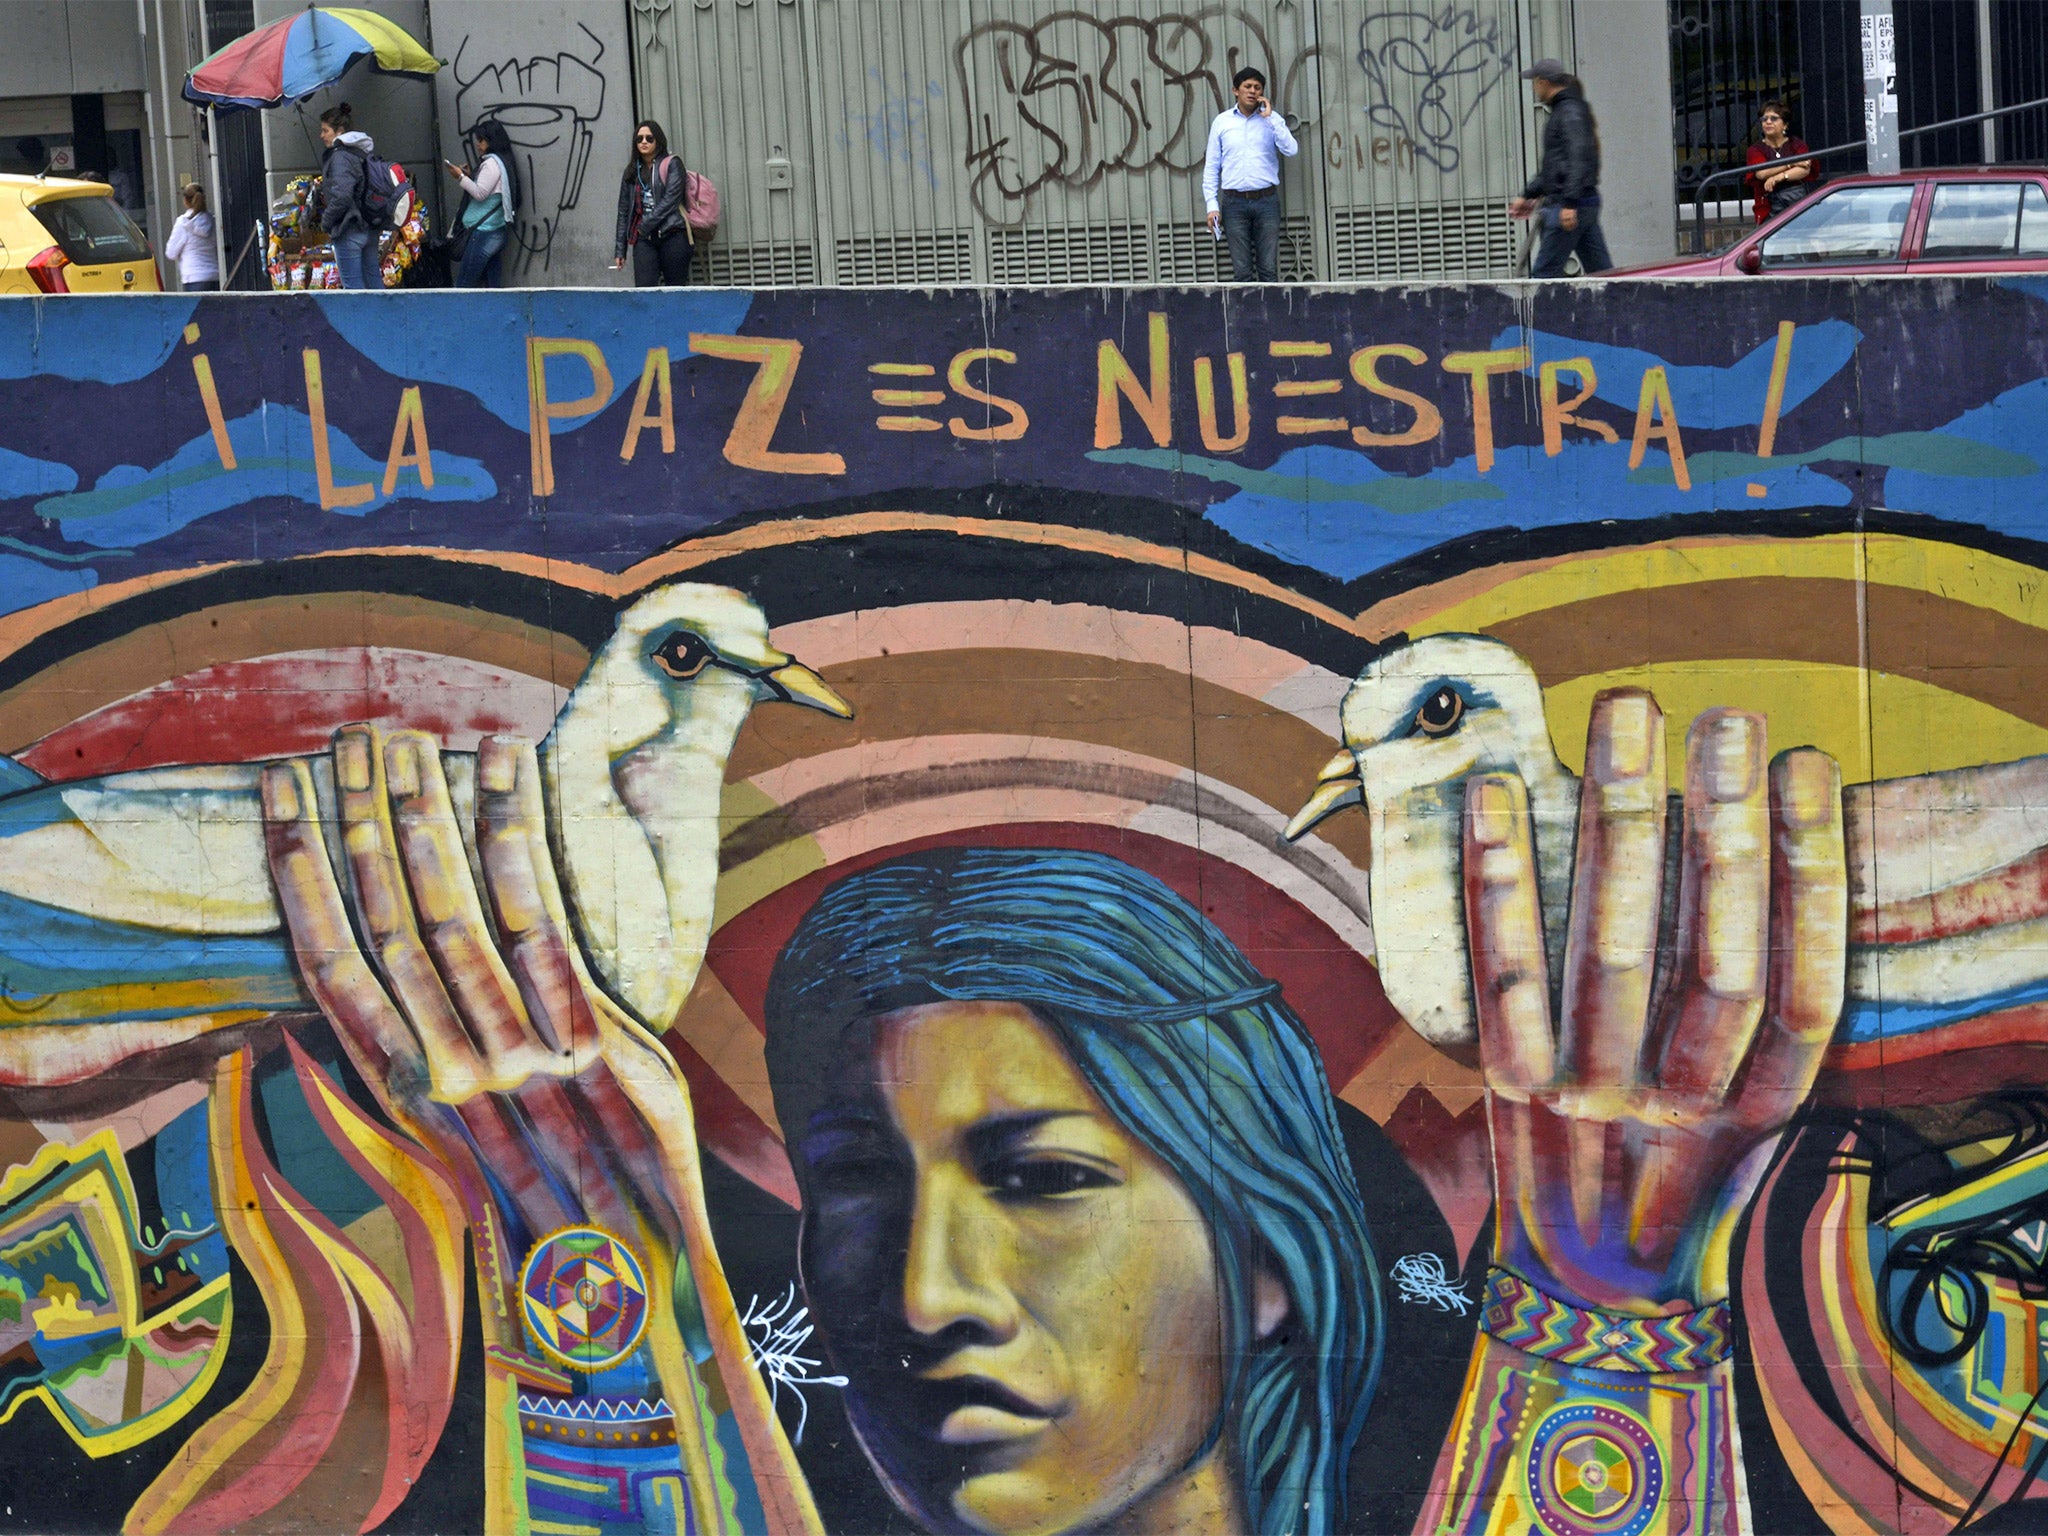 Graffiti in Bogota reflects the desire for peace in Colombia